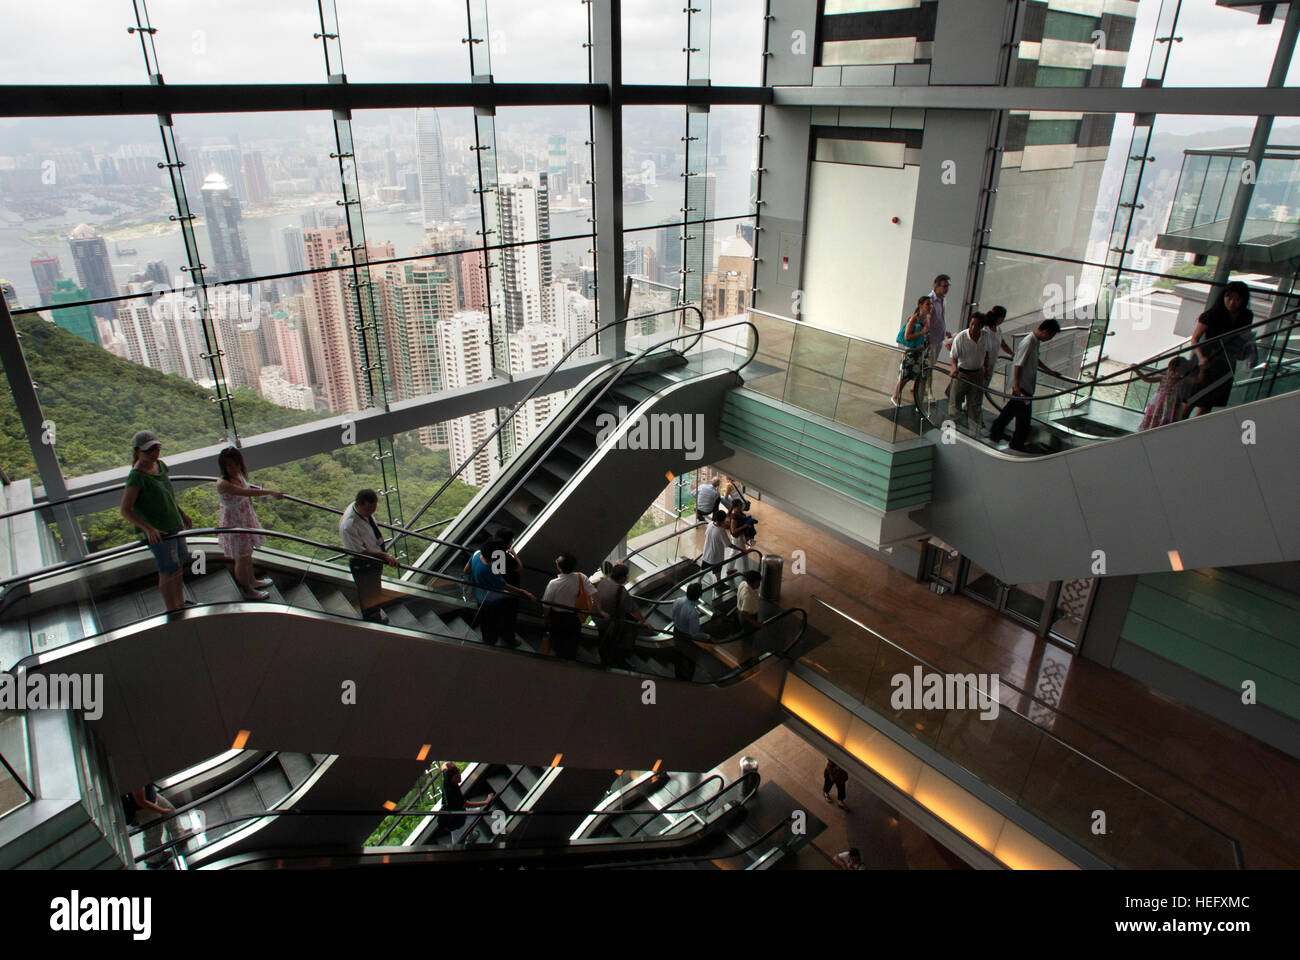 Visitors on escalators inside the Victoria New Peak Tower, Hong Kong, China Stock Photo